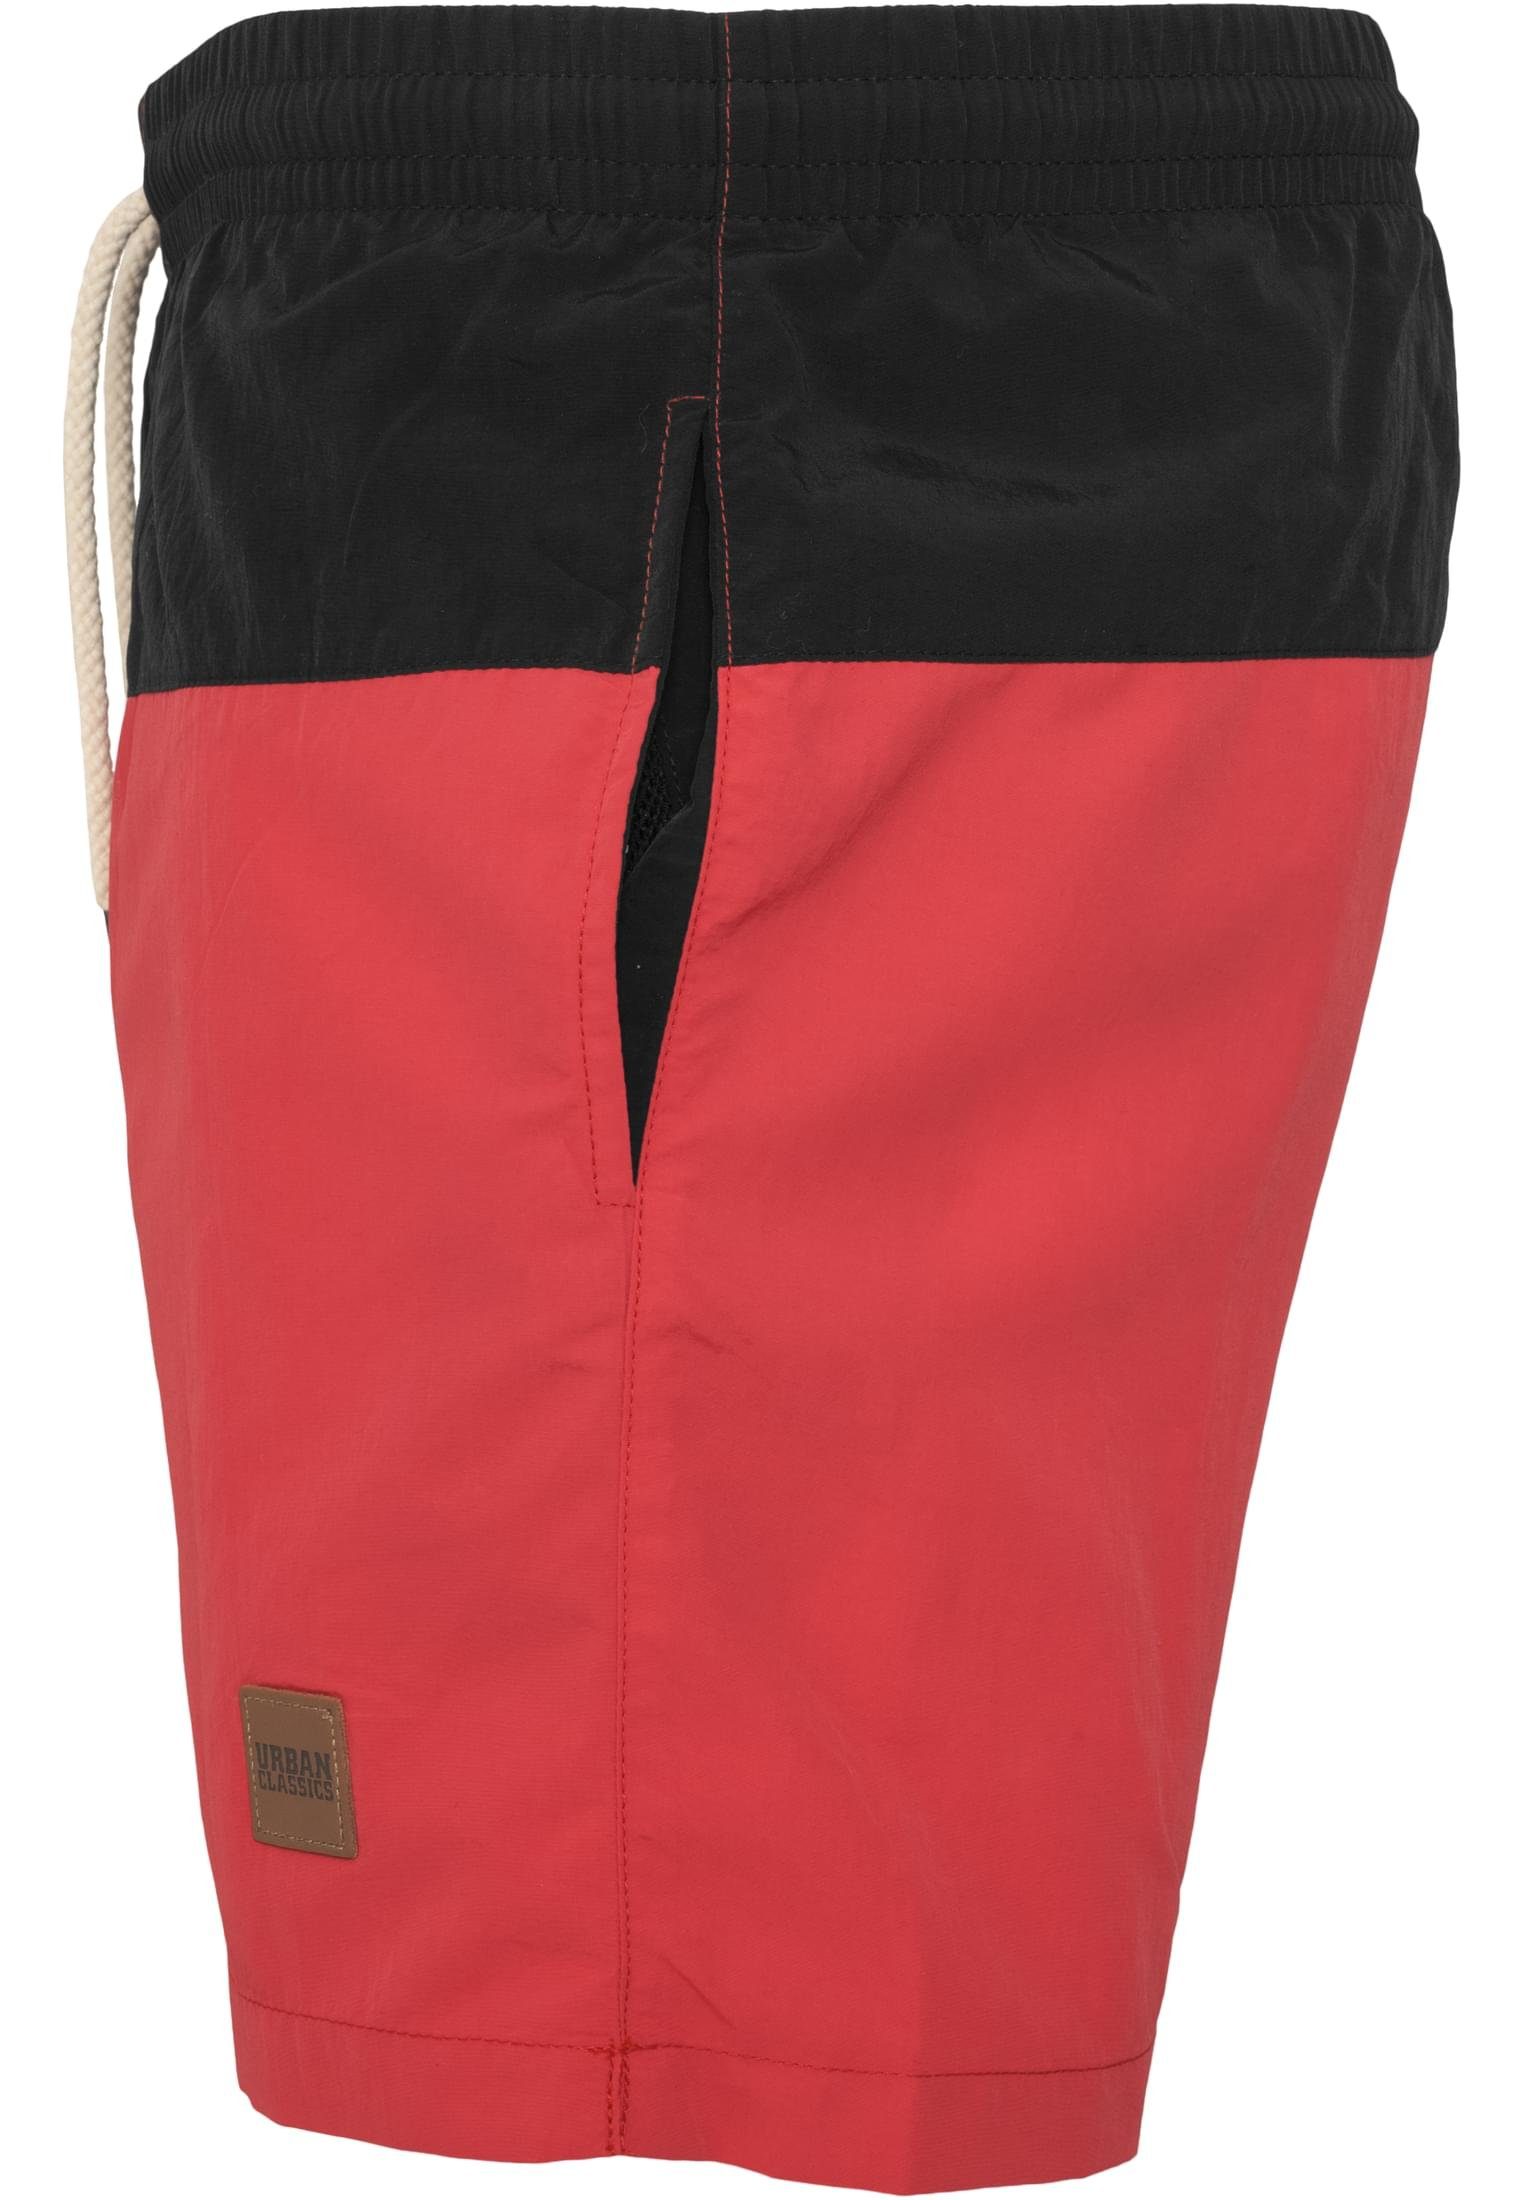 URBAN CLASSICS Shorts Herren blk/red Swim Badeshorts